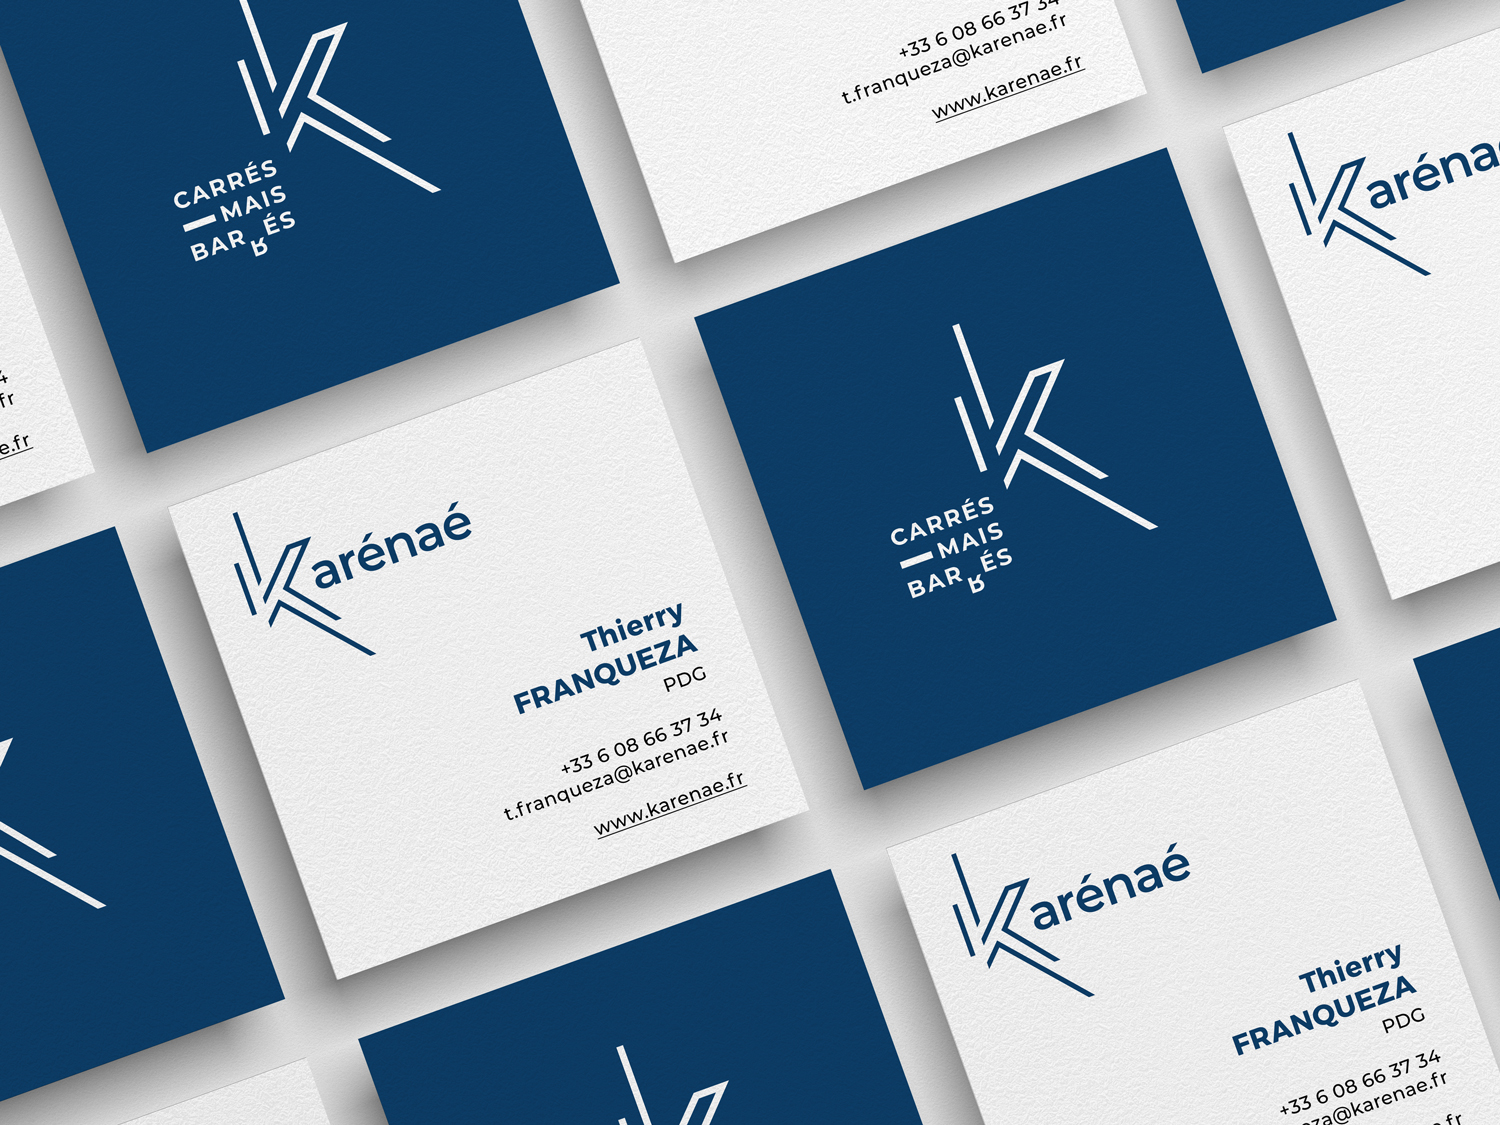 KARENAE-carte-logo-bleu